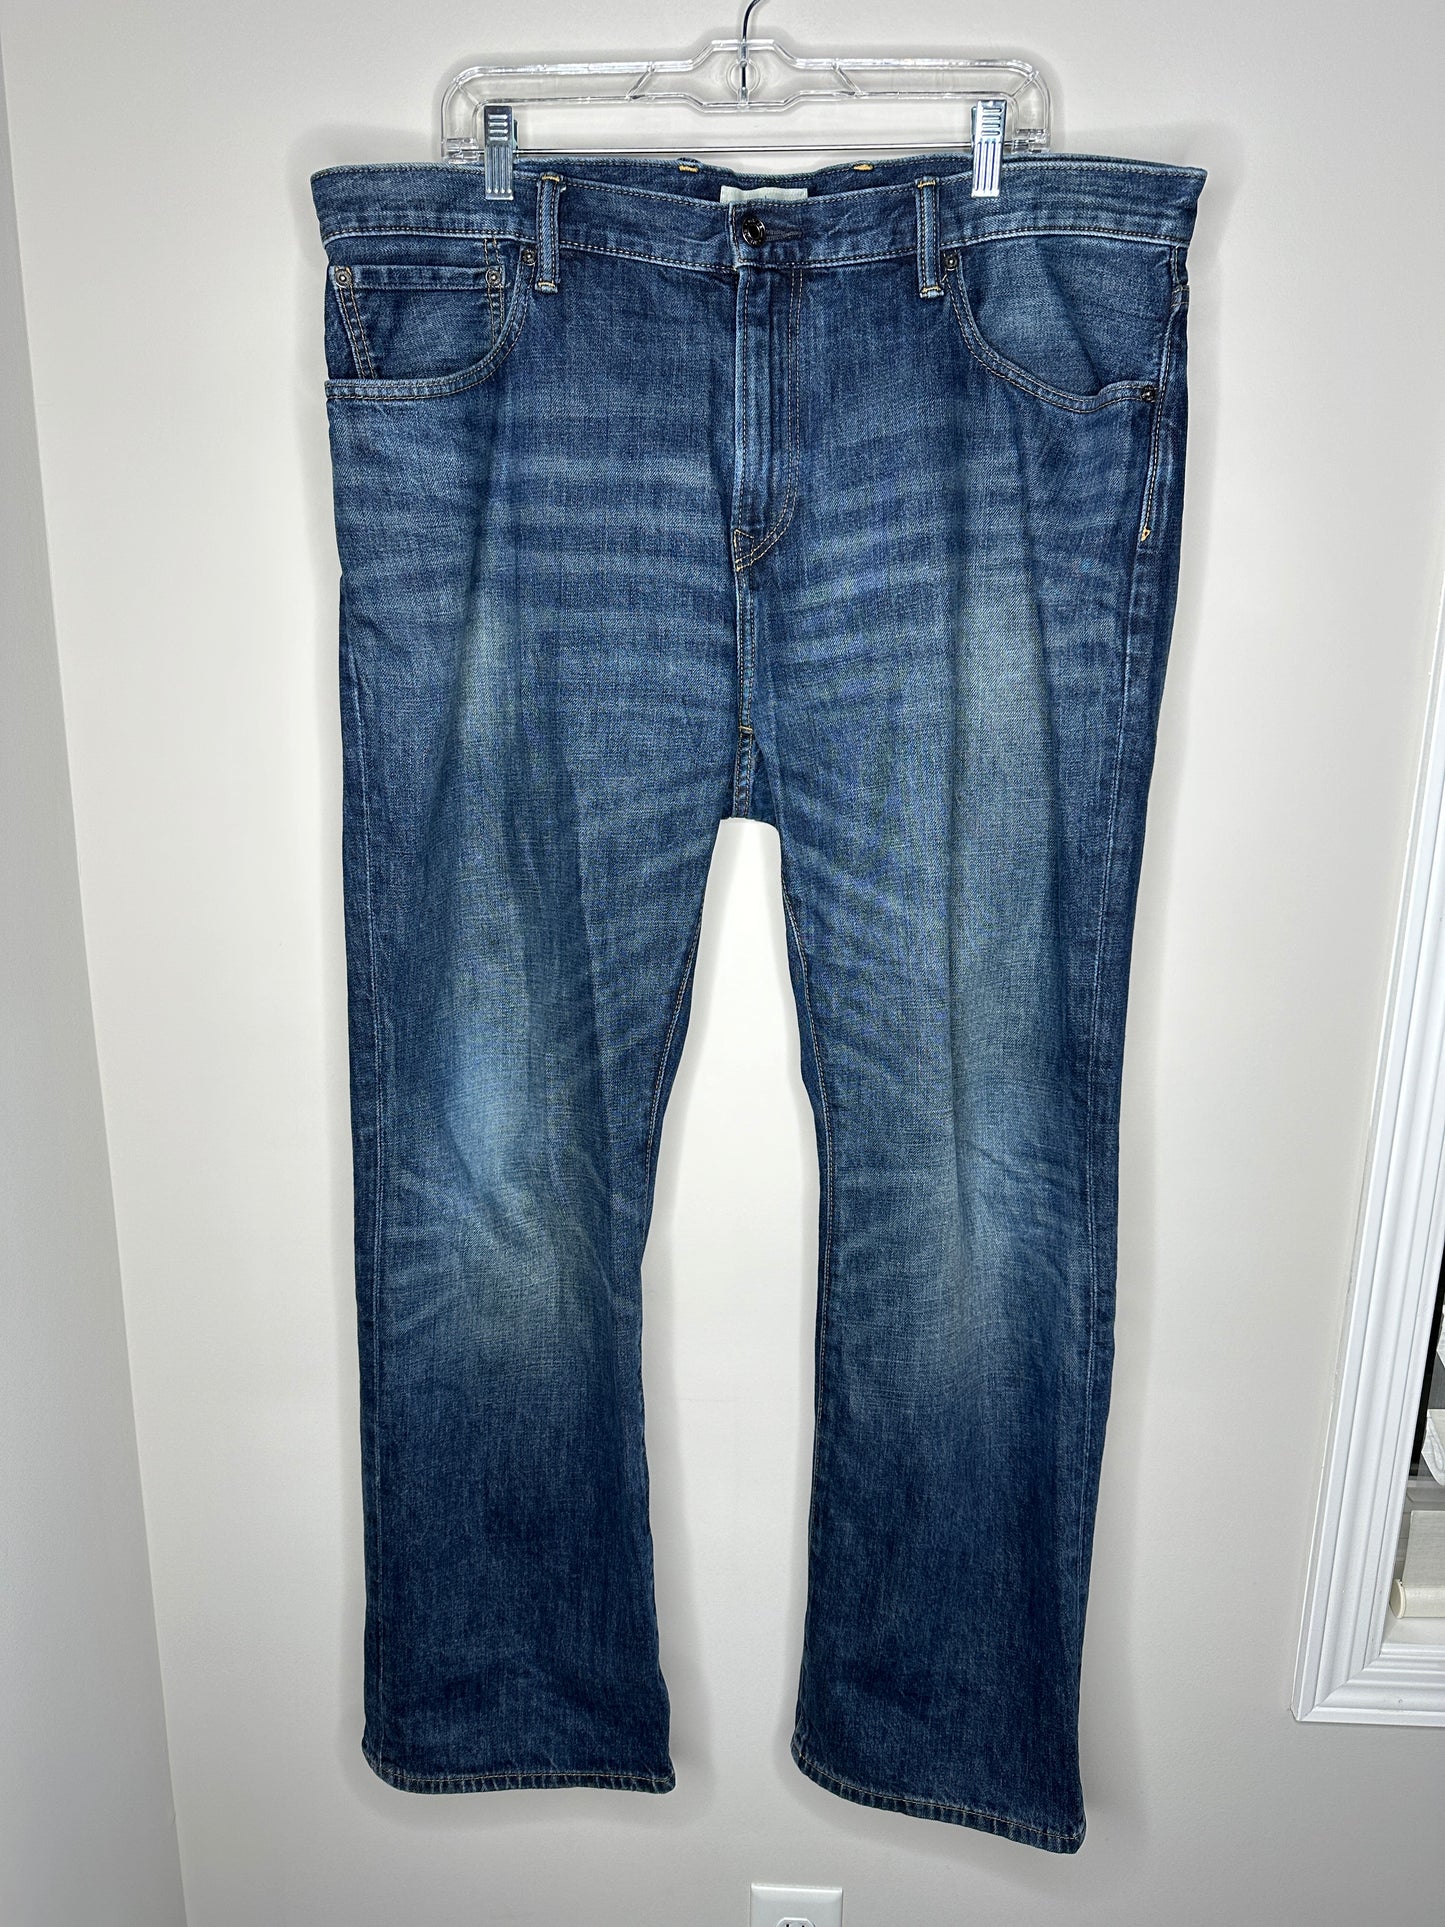 Gap 1969 Men's Size 38x30 (marked) Standard Blue Denim Jeans